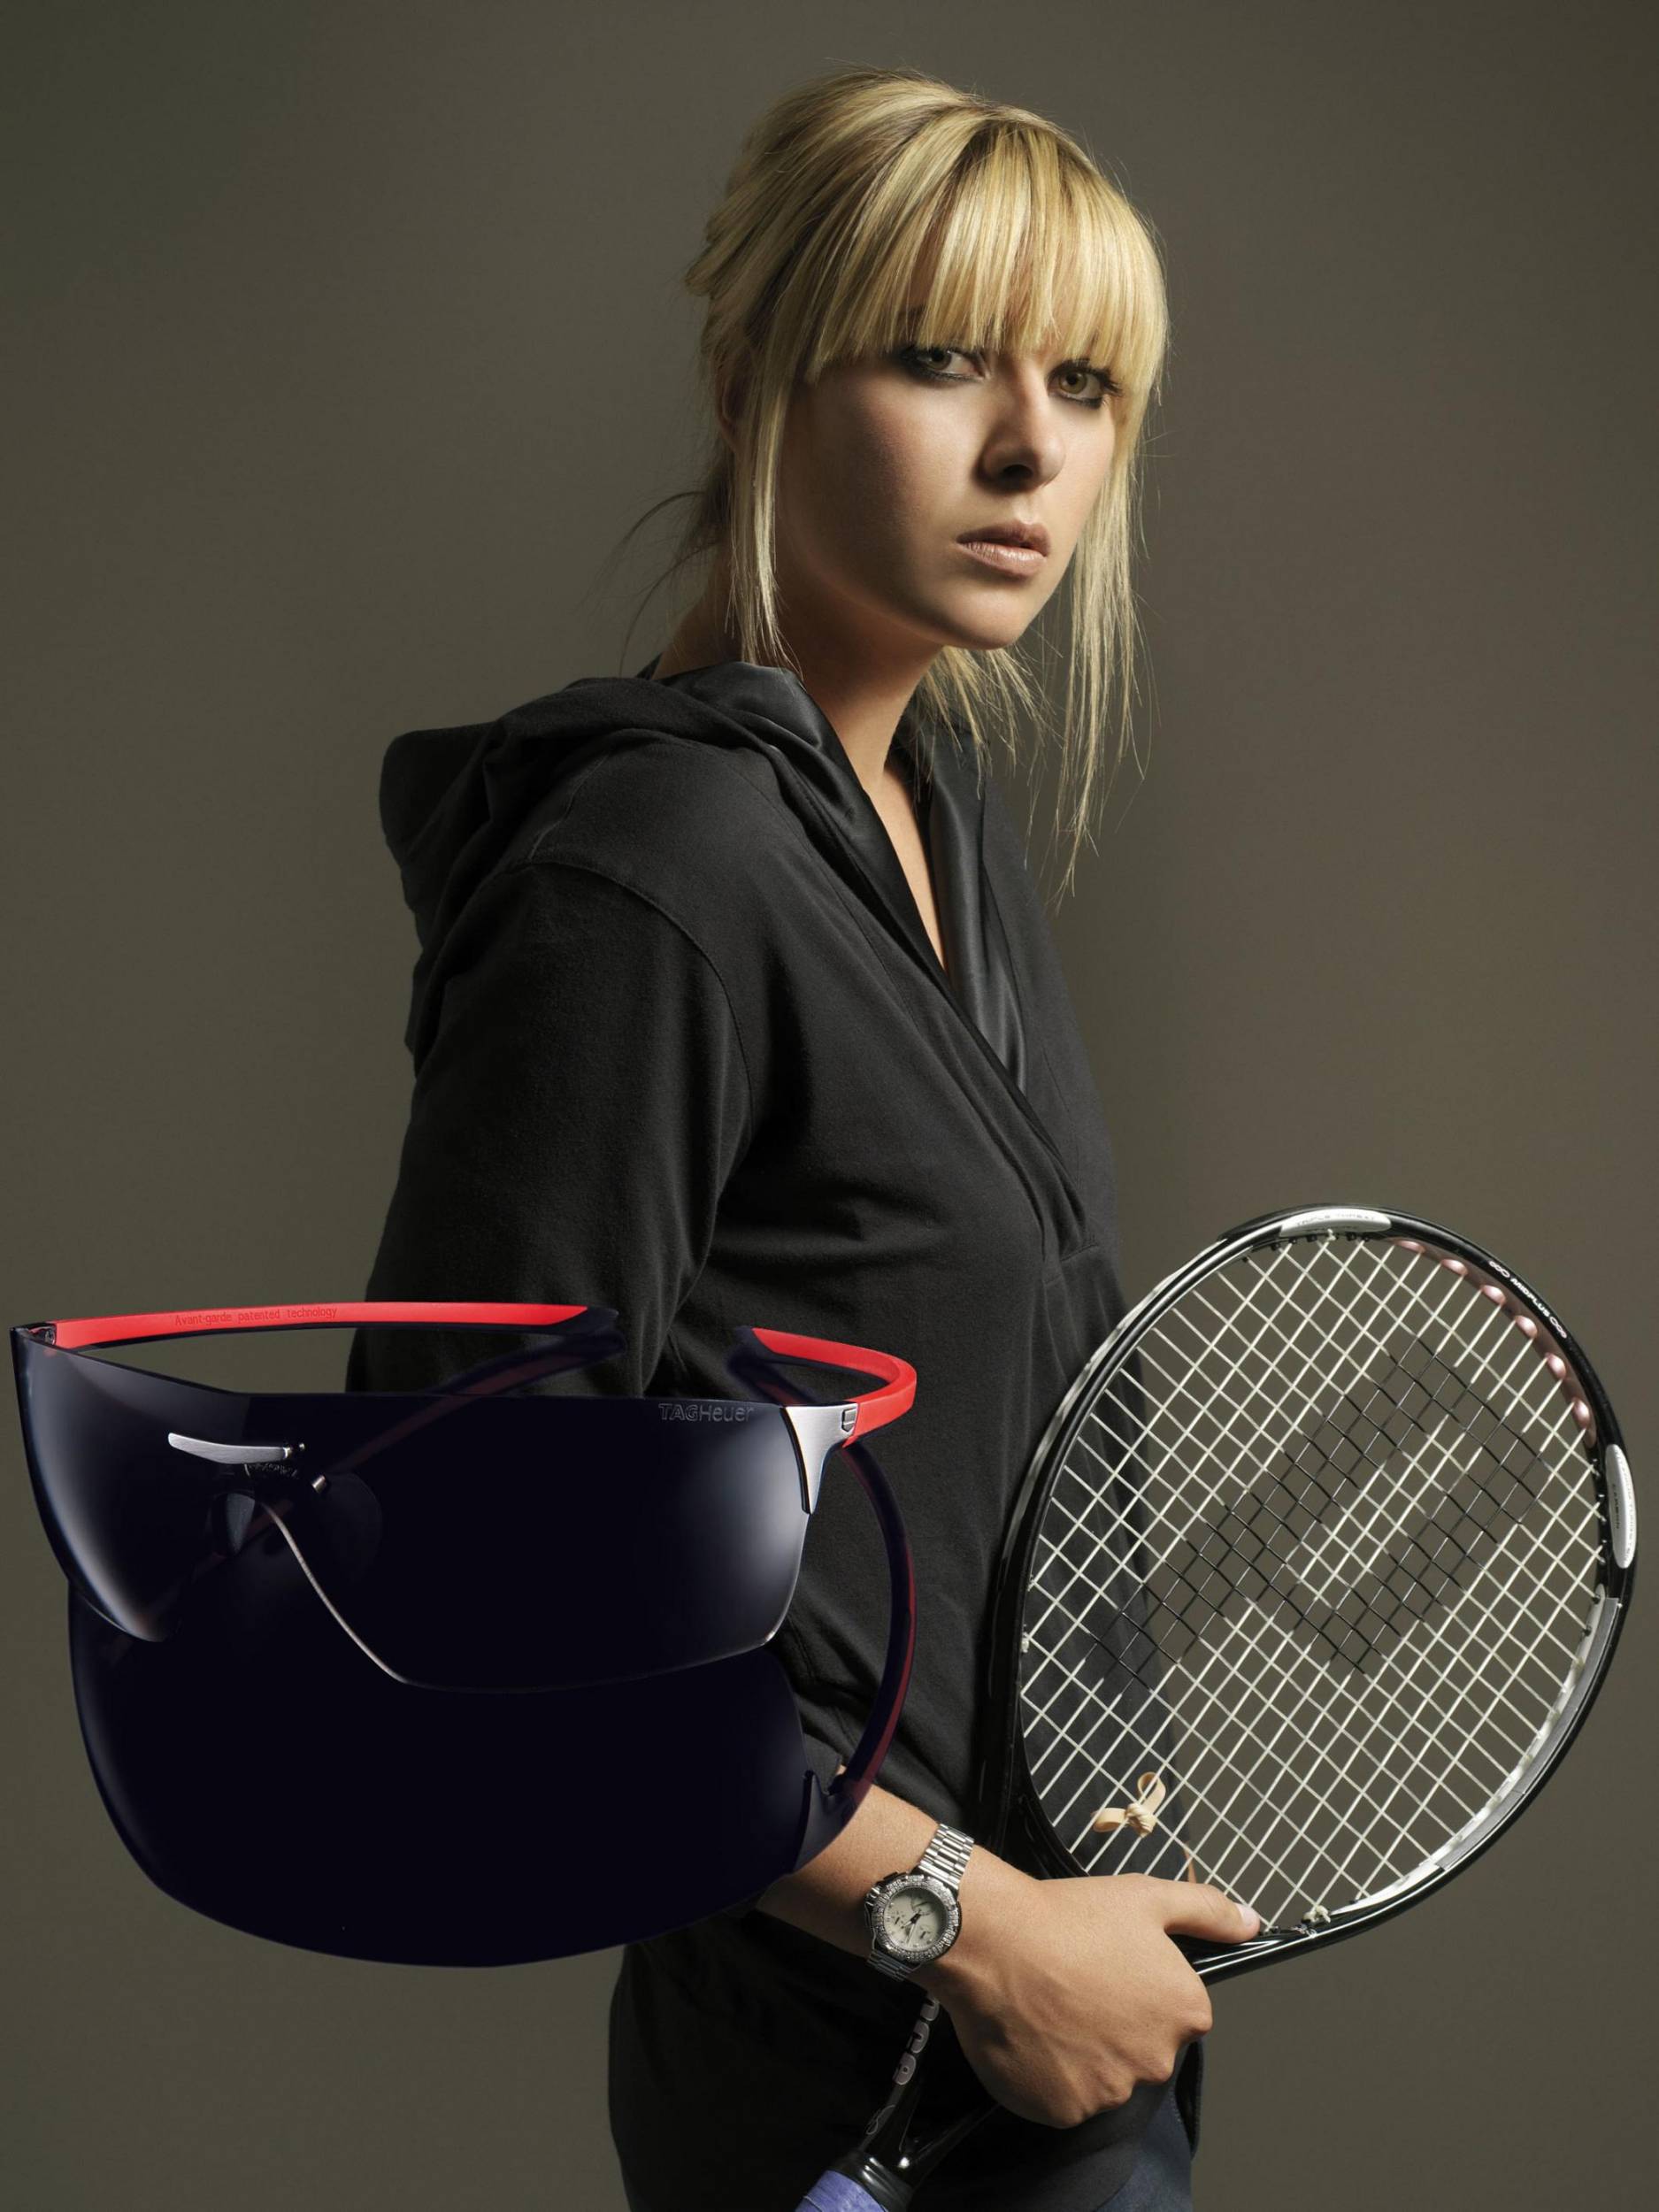 Теннисистка Маша Шарапова HD фото картинки, обои рабочий стол